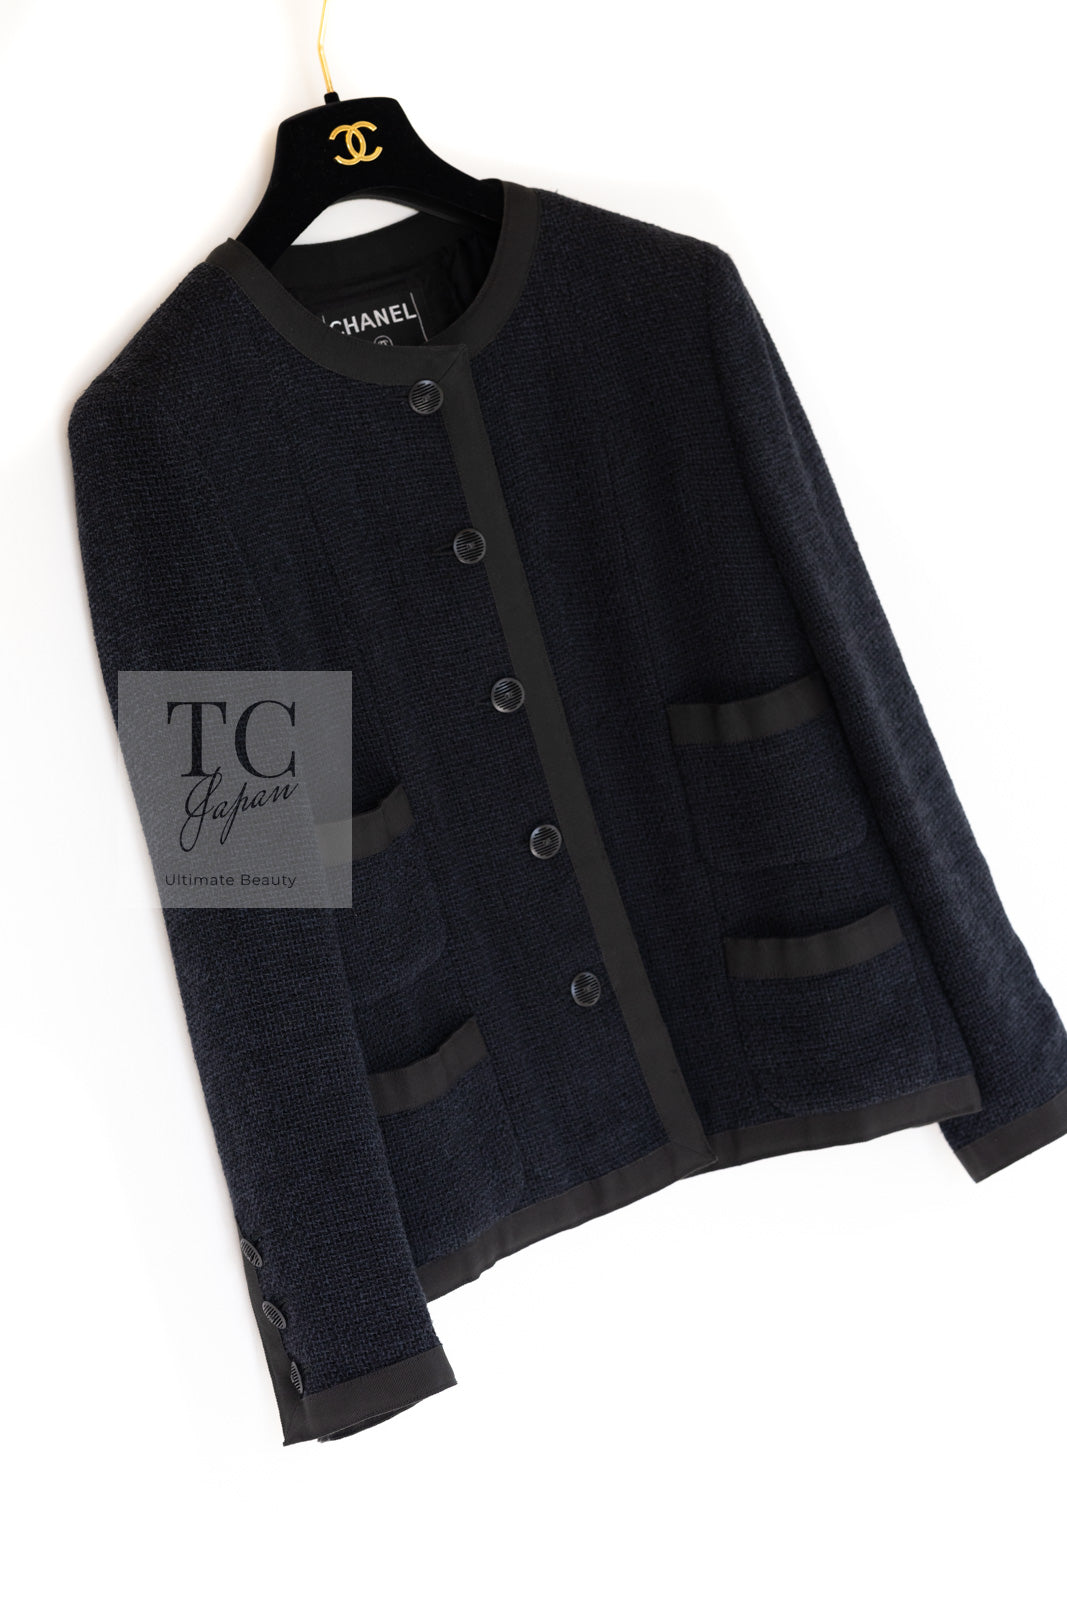 CHANEL 02S Vintage Black Collarless Tweed Jacket 36 38 シャネル ヴィンテージ ブラック ノーカラー ツイード ジャケット 即発